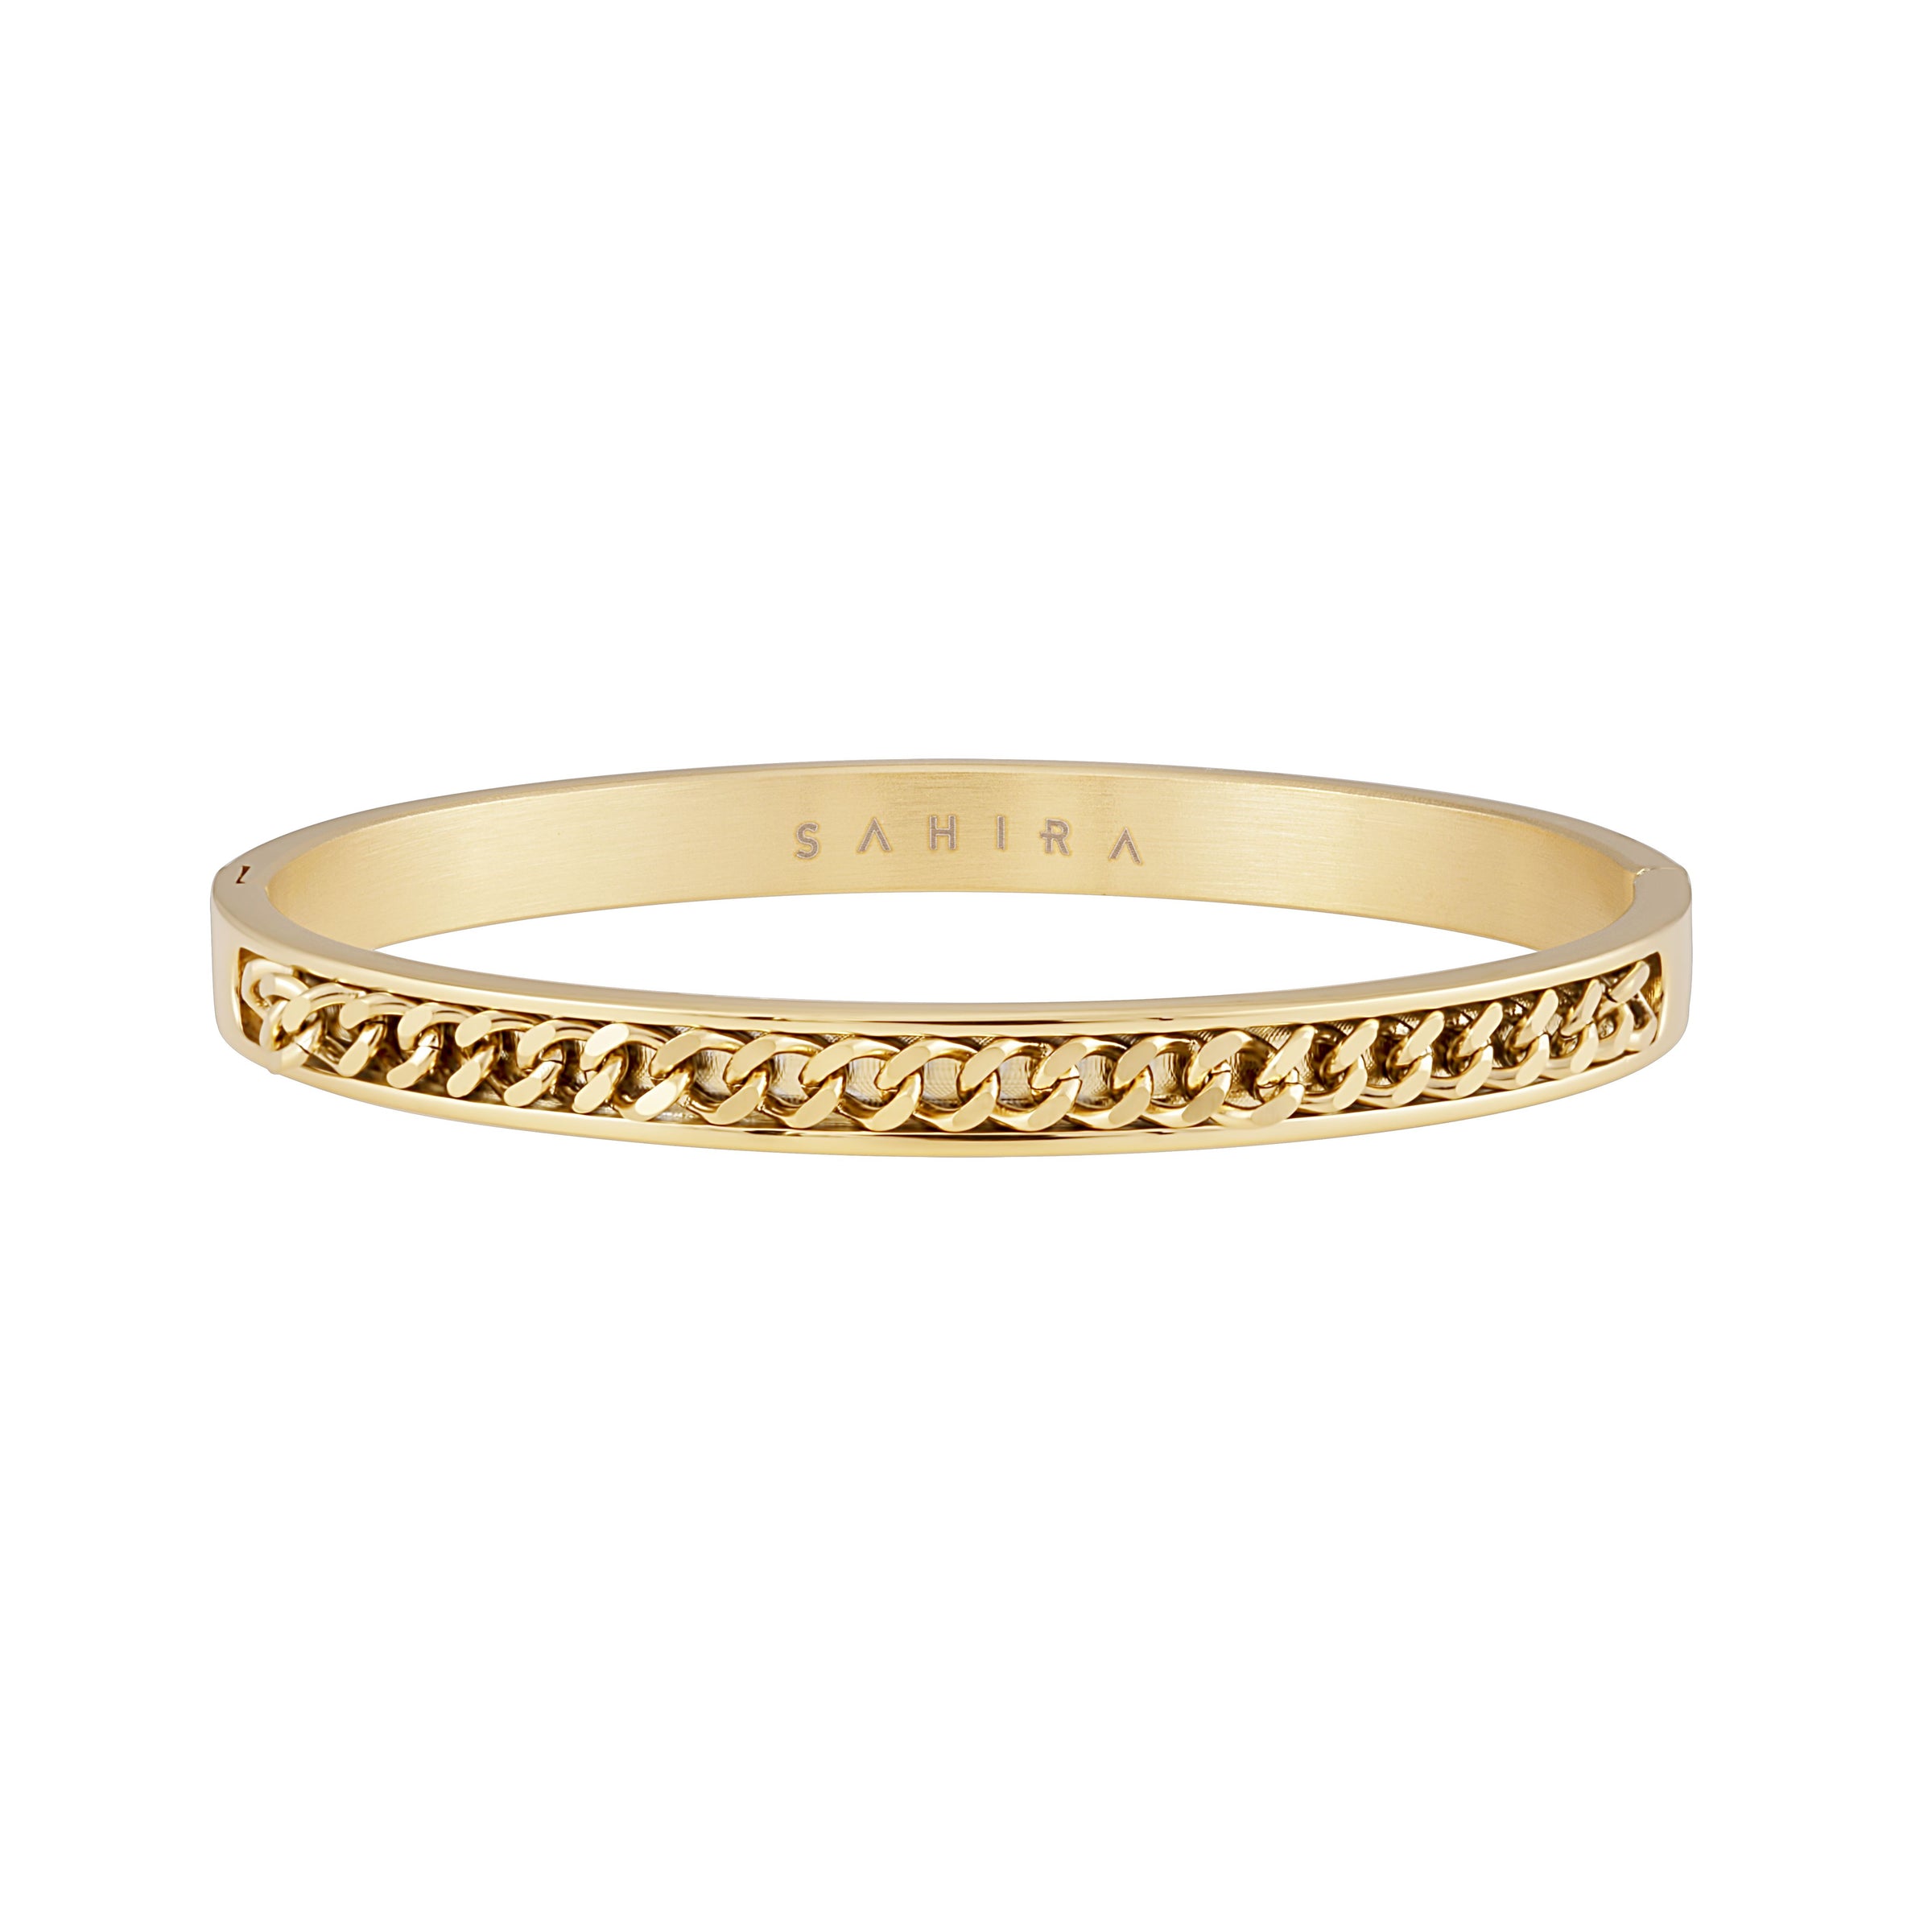 Chain Bangle – Sahira Jewelry Design